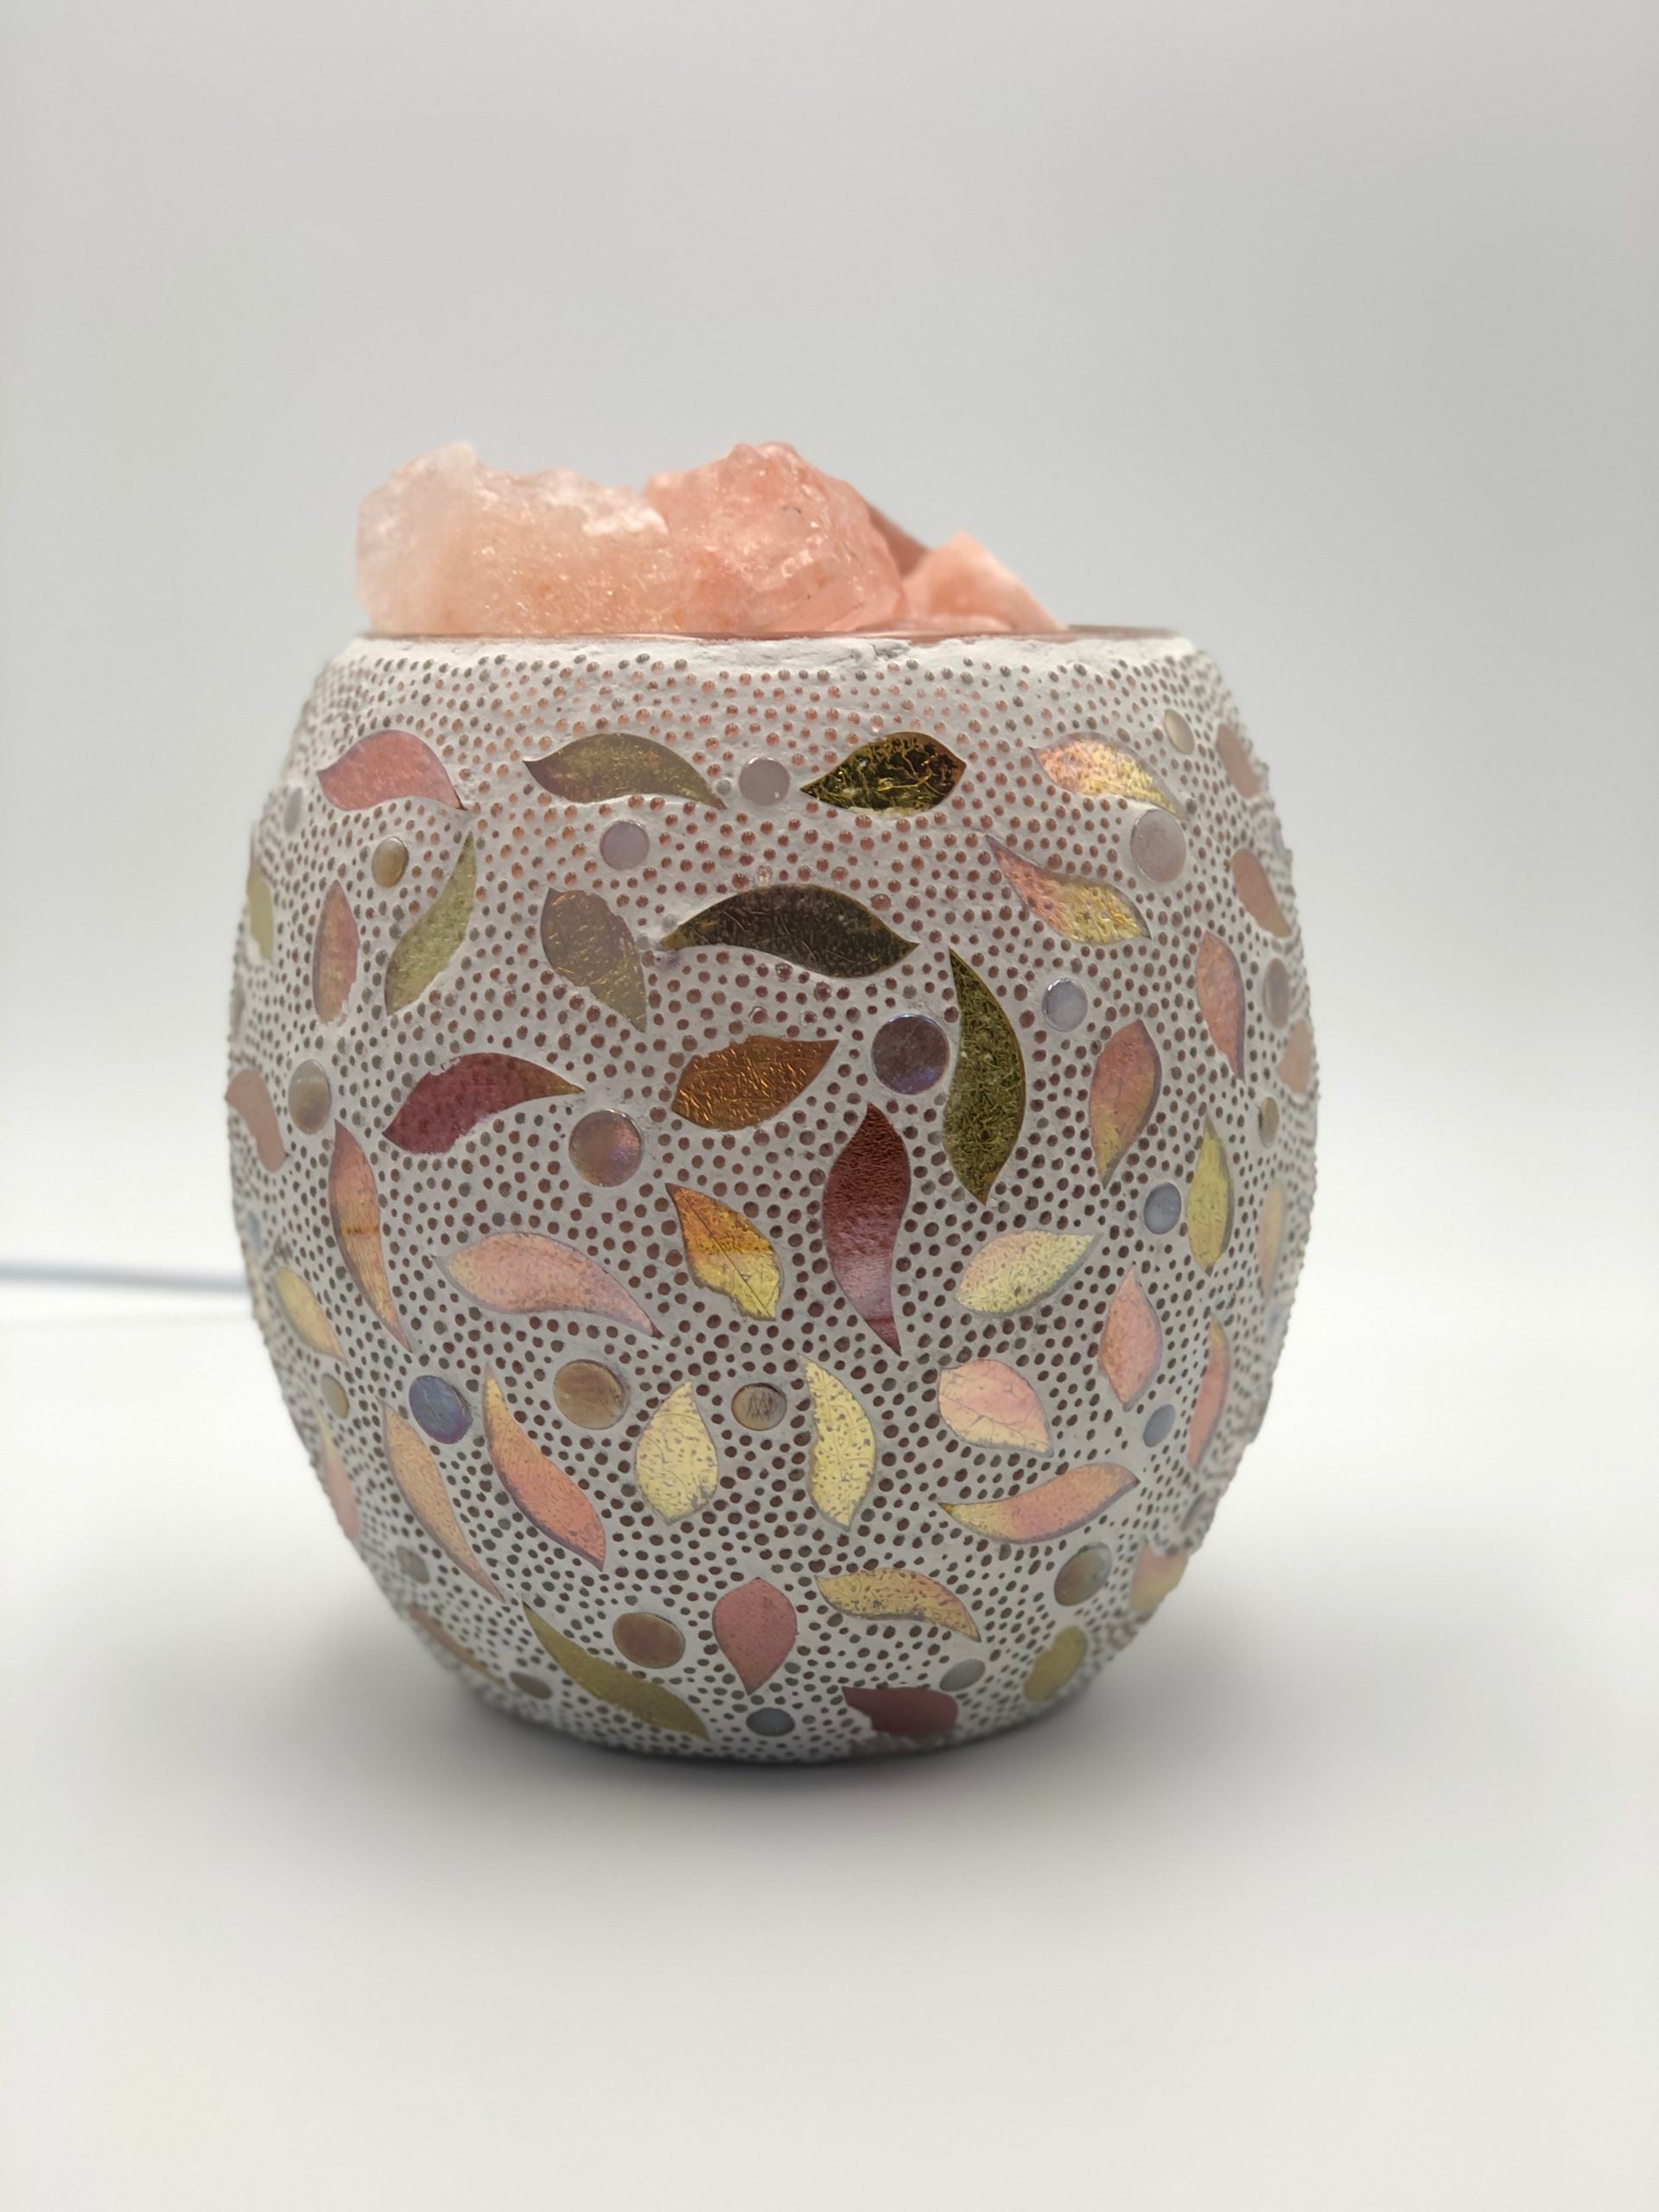 Gold Leaf Glass Mosaic Vase Bowl Himalayan Salt Lamp Natural